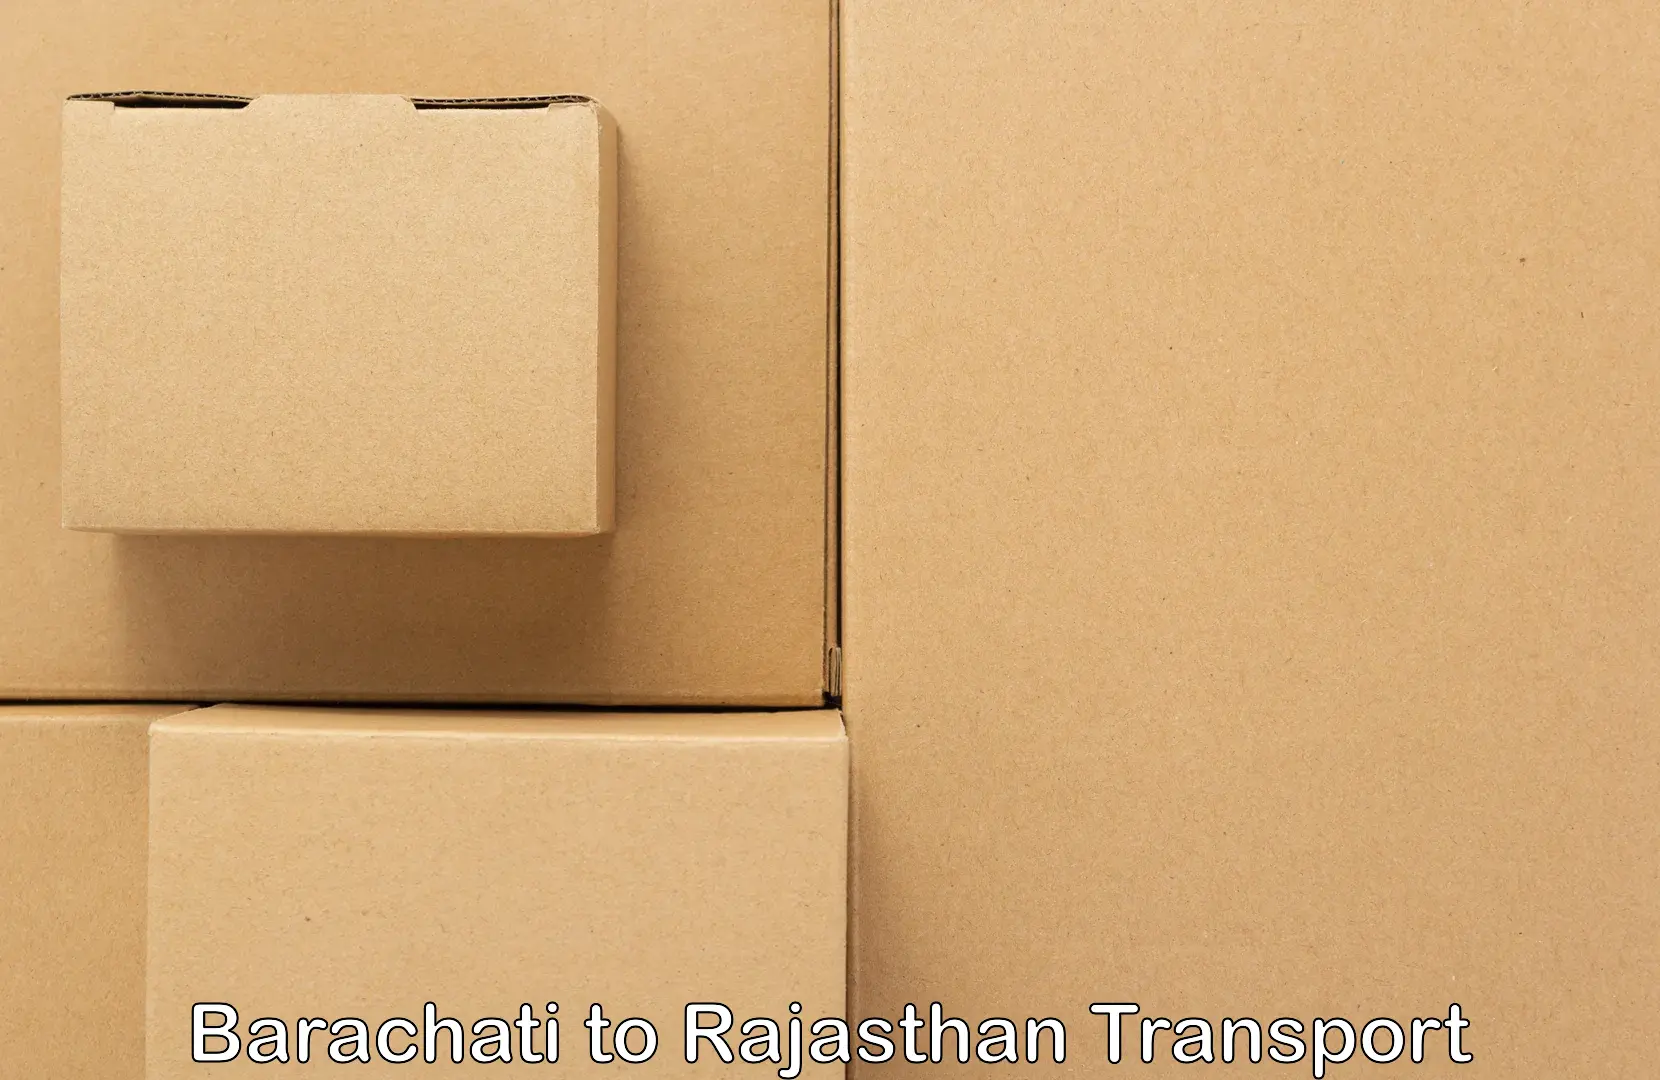 Truck transport companies in India Barachati to Ghator